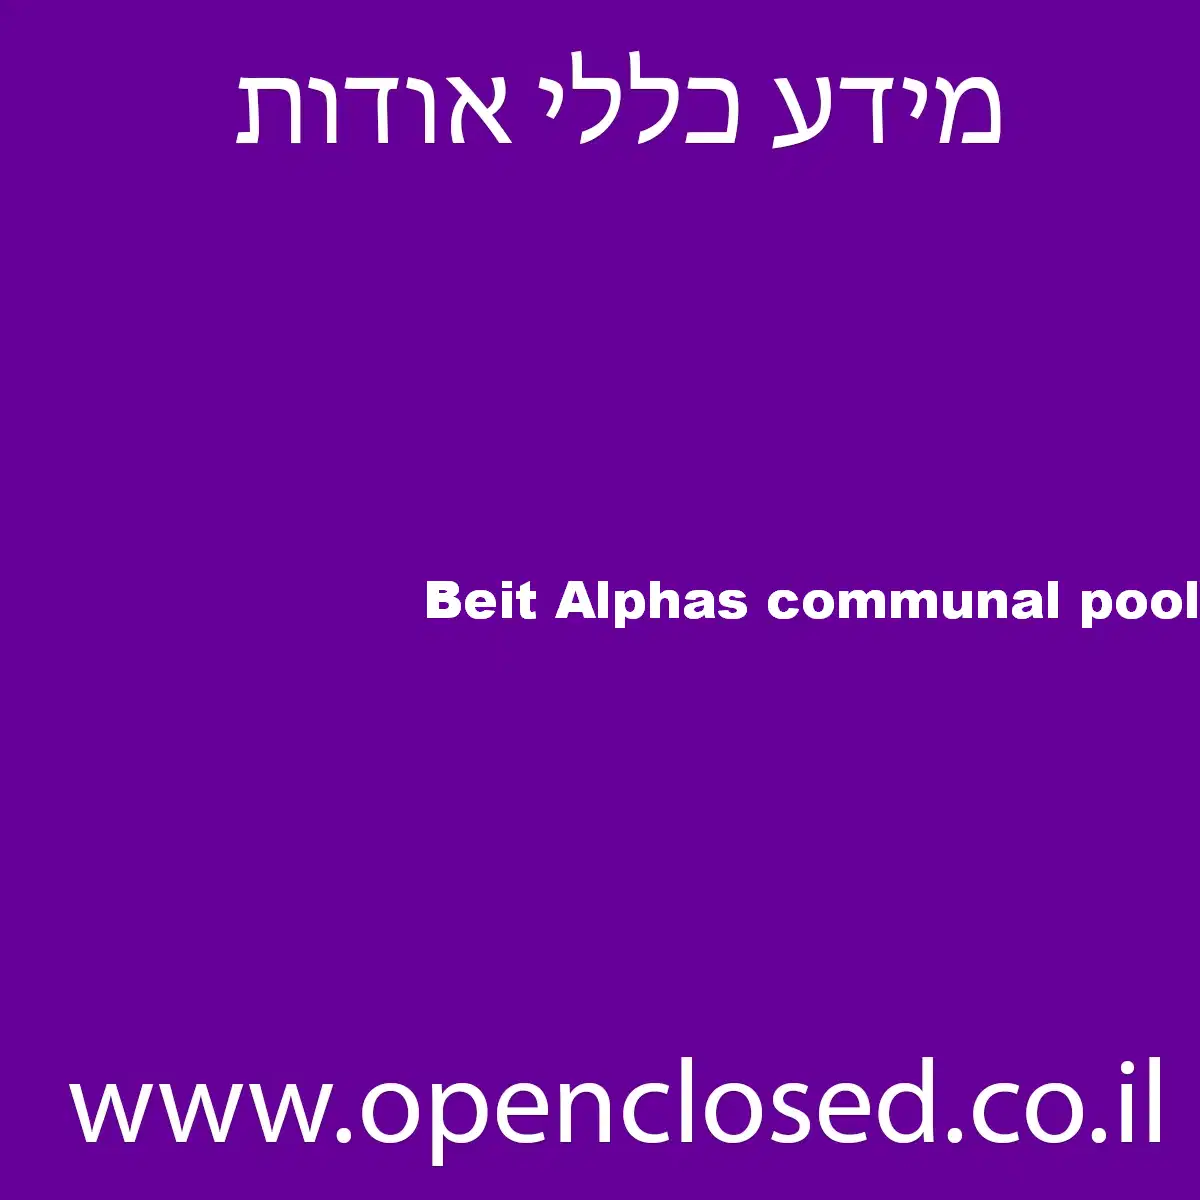 Beit Alphas communal pool